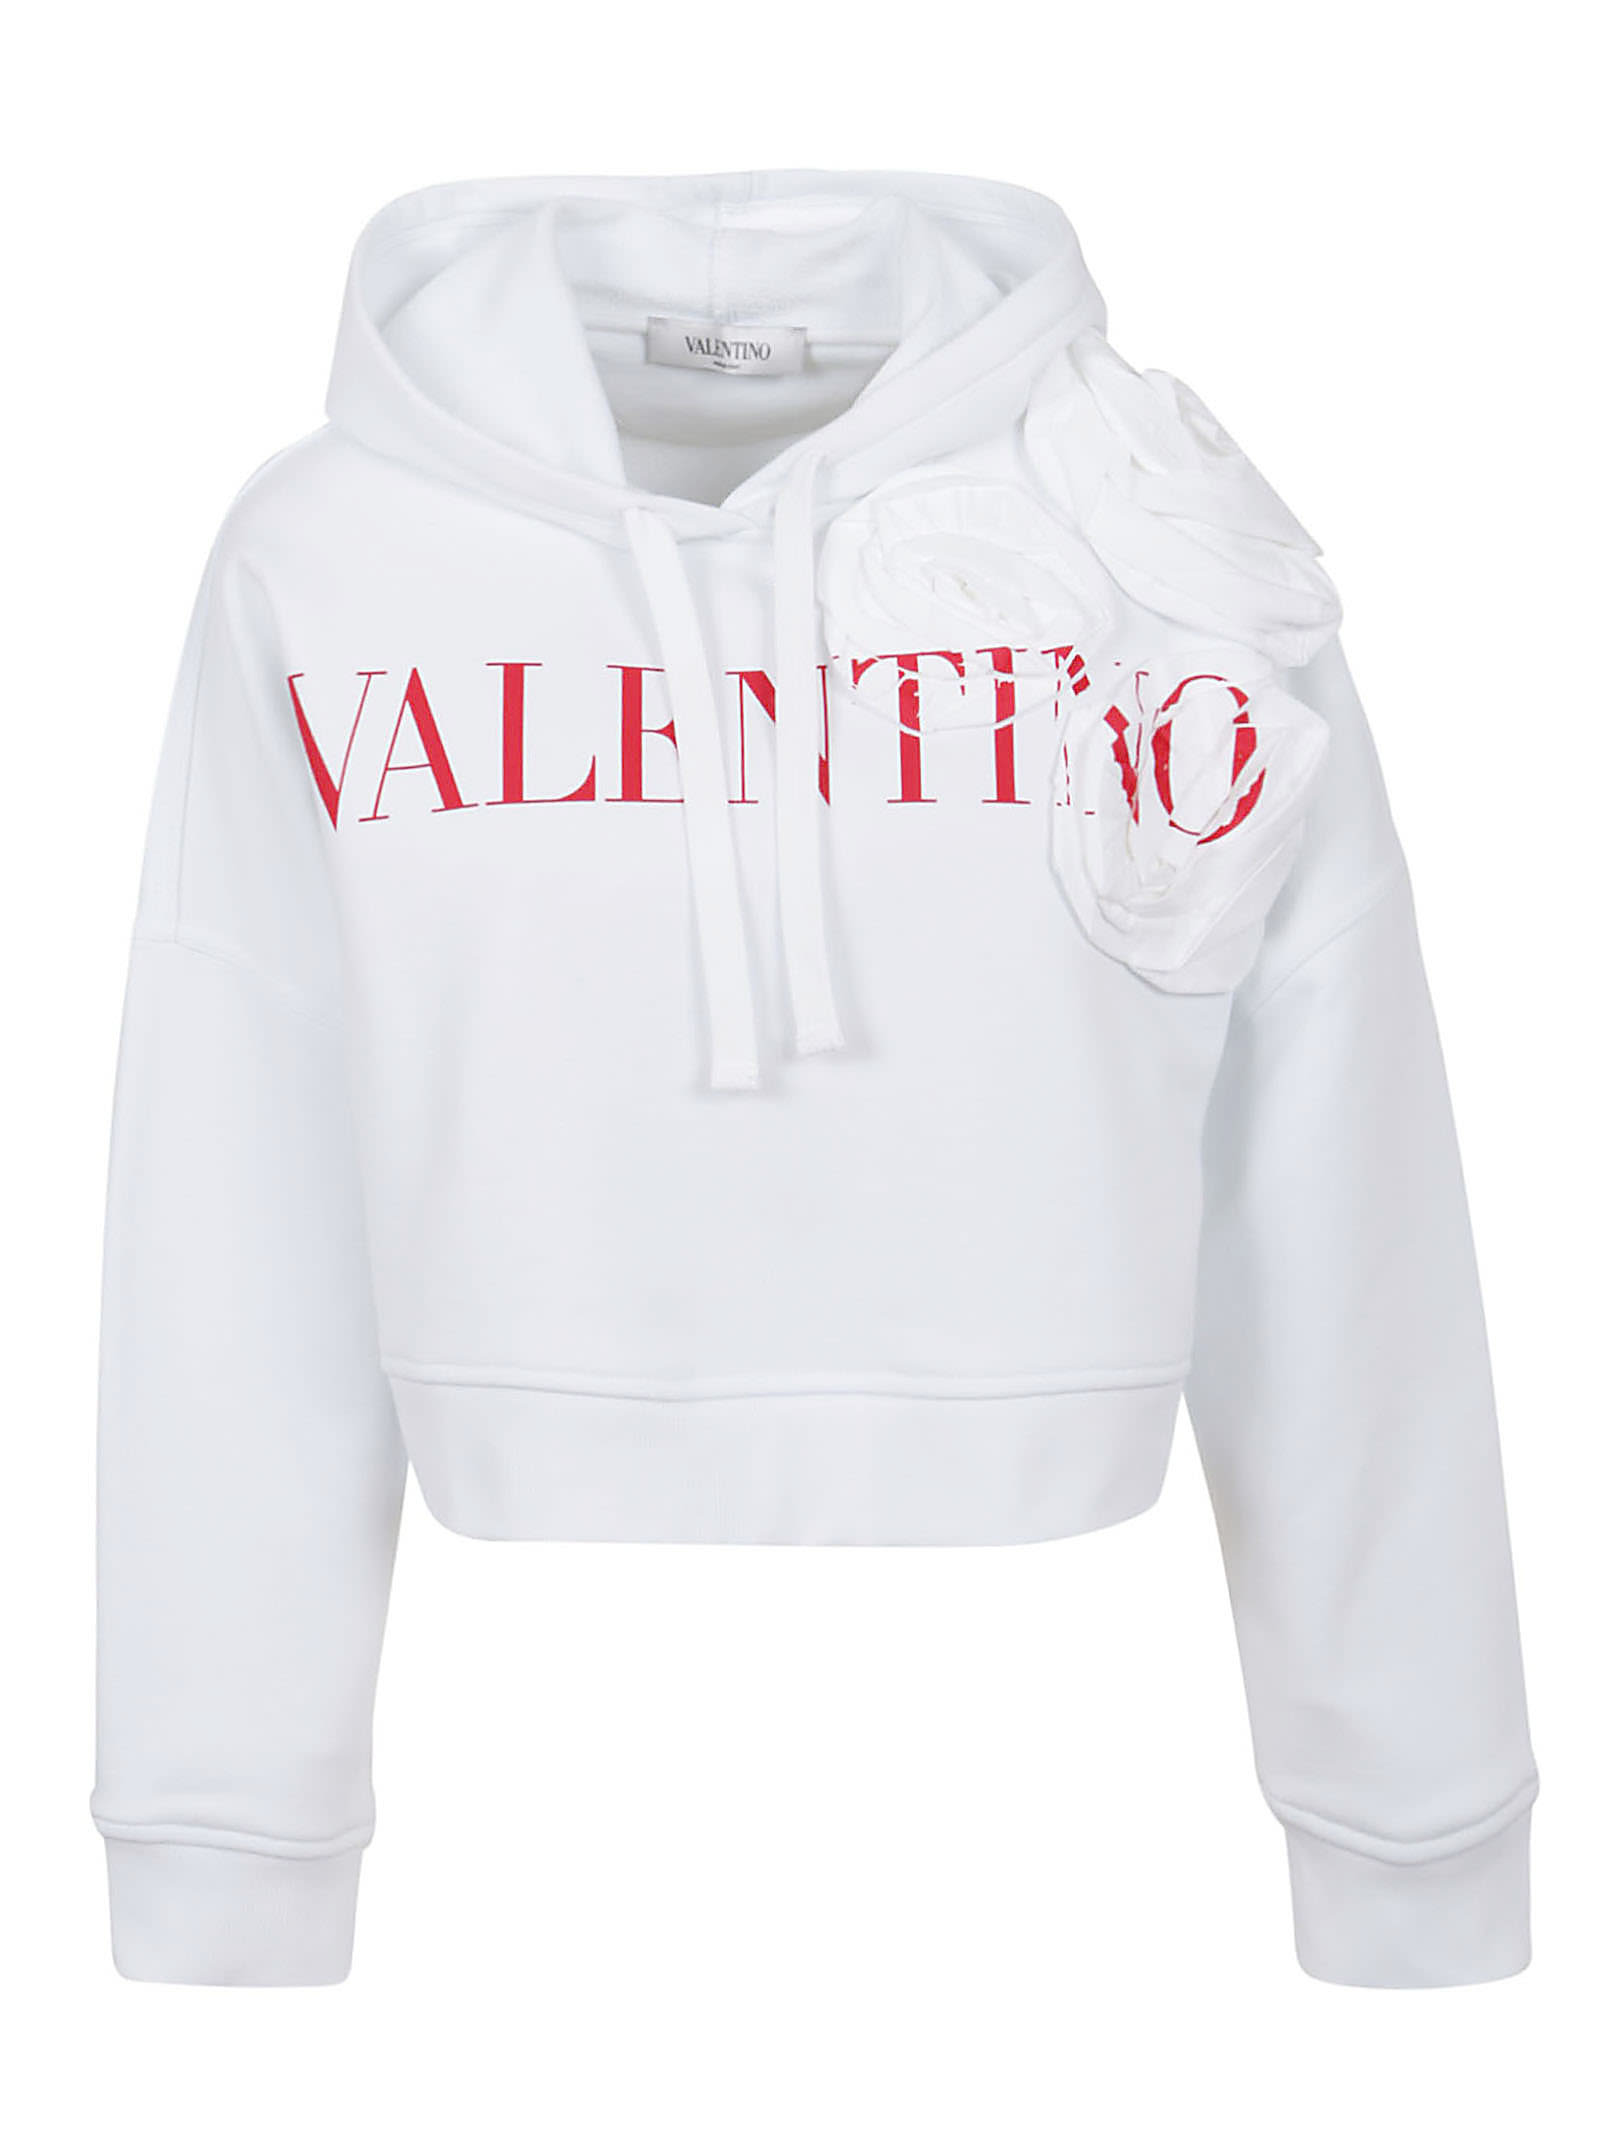 Valentino Jersey Sweatshirt + Rosa Atelier